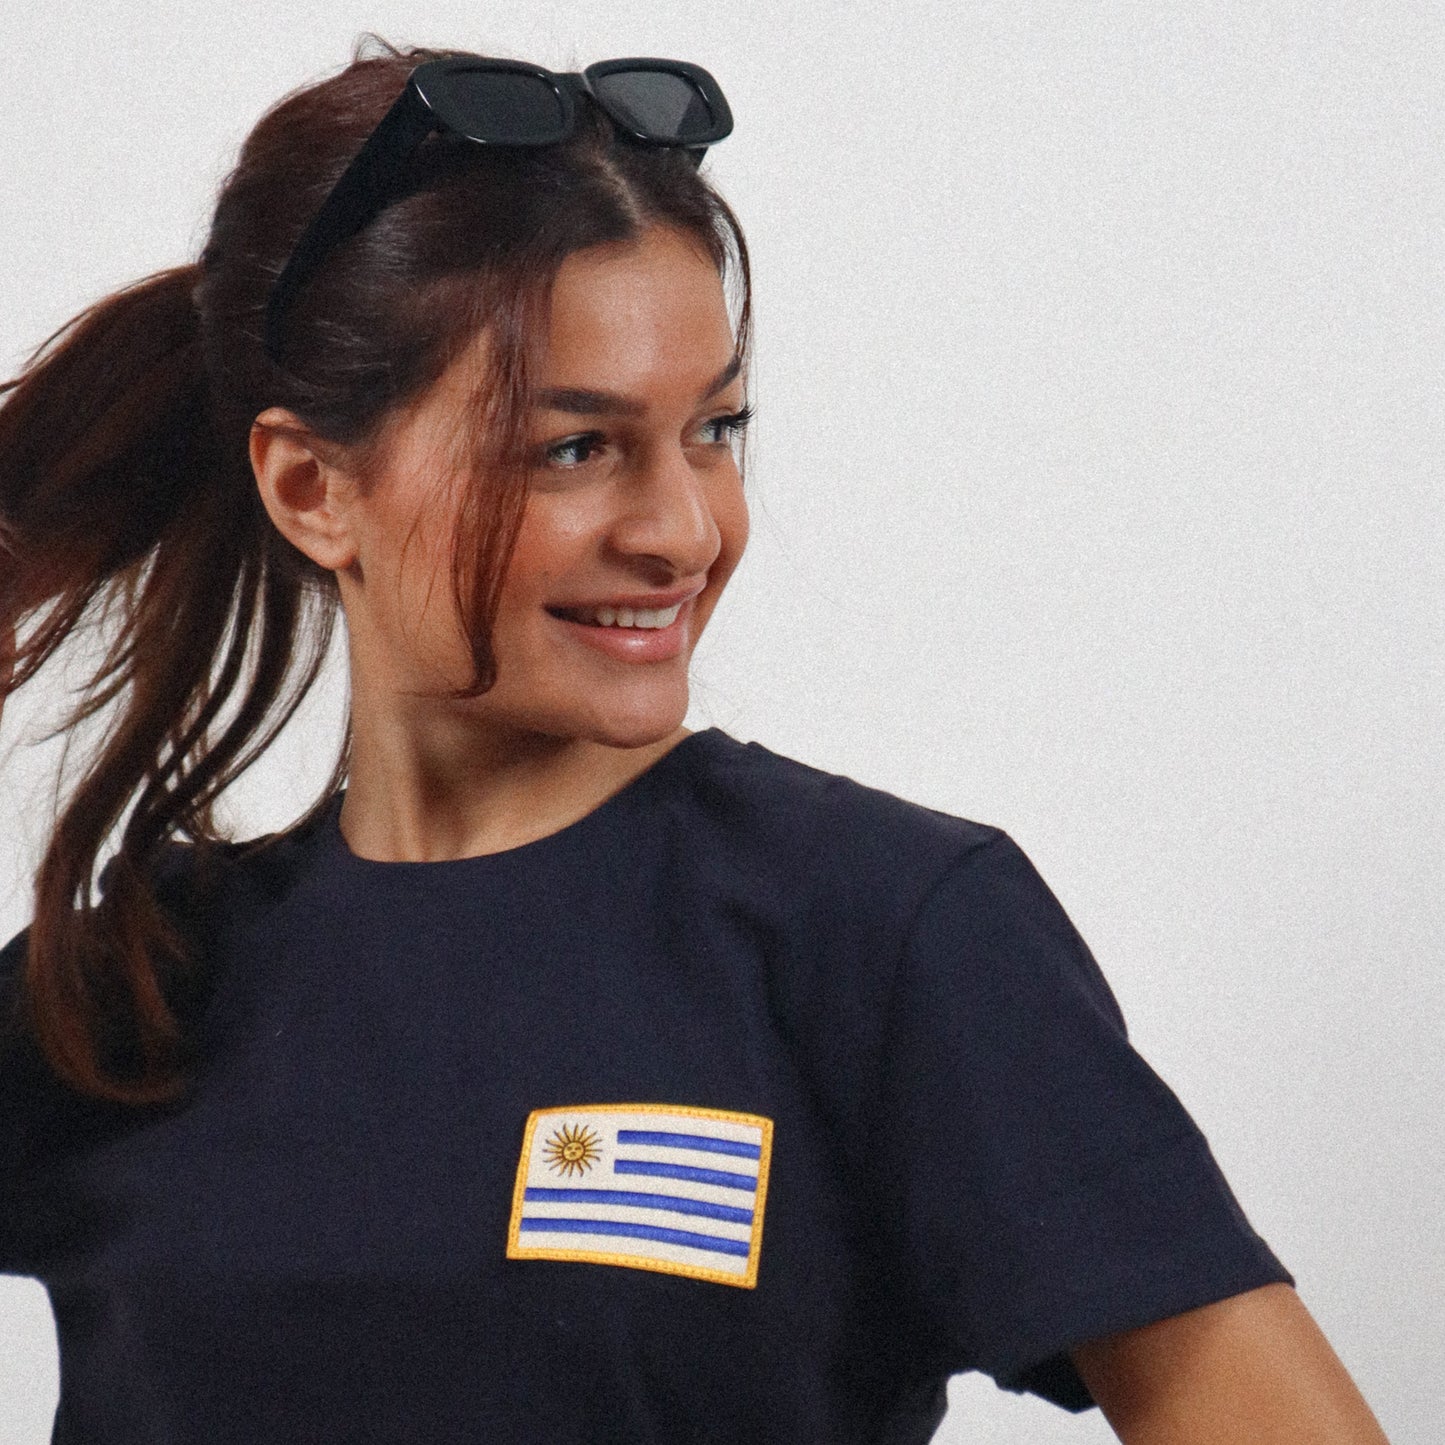 Uruguay • T-shirt